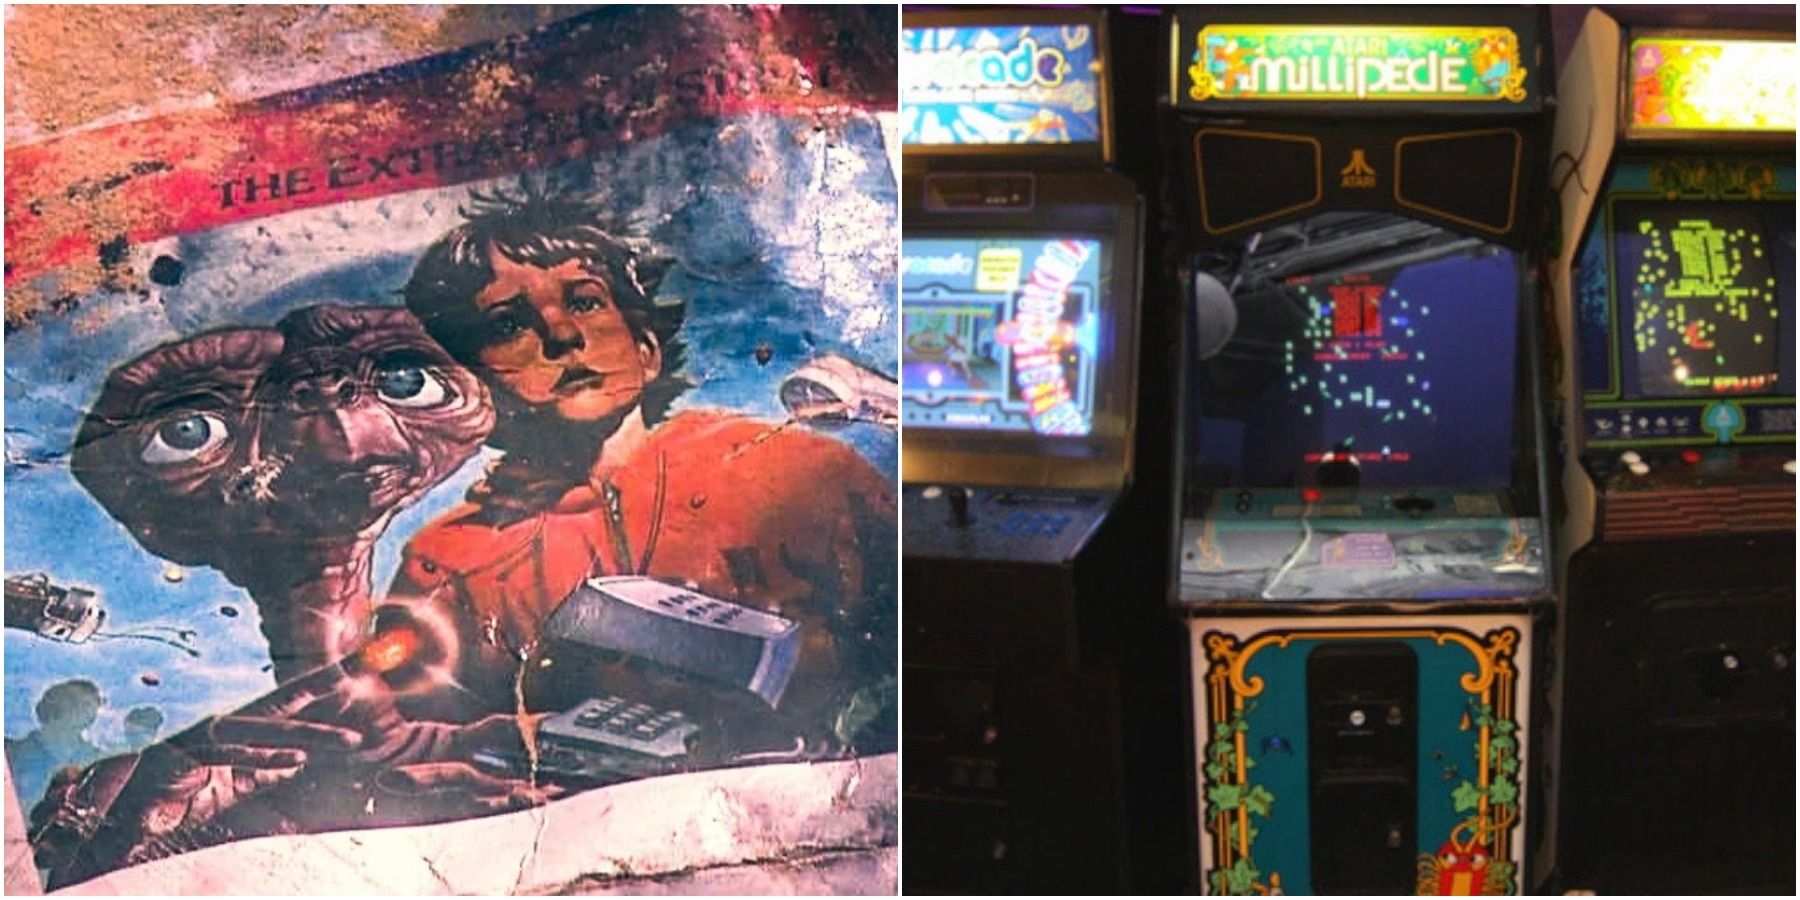 (Left) Damaged E.T. game box (Right) Arcade machines